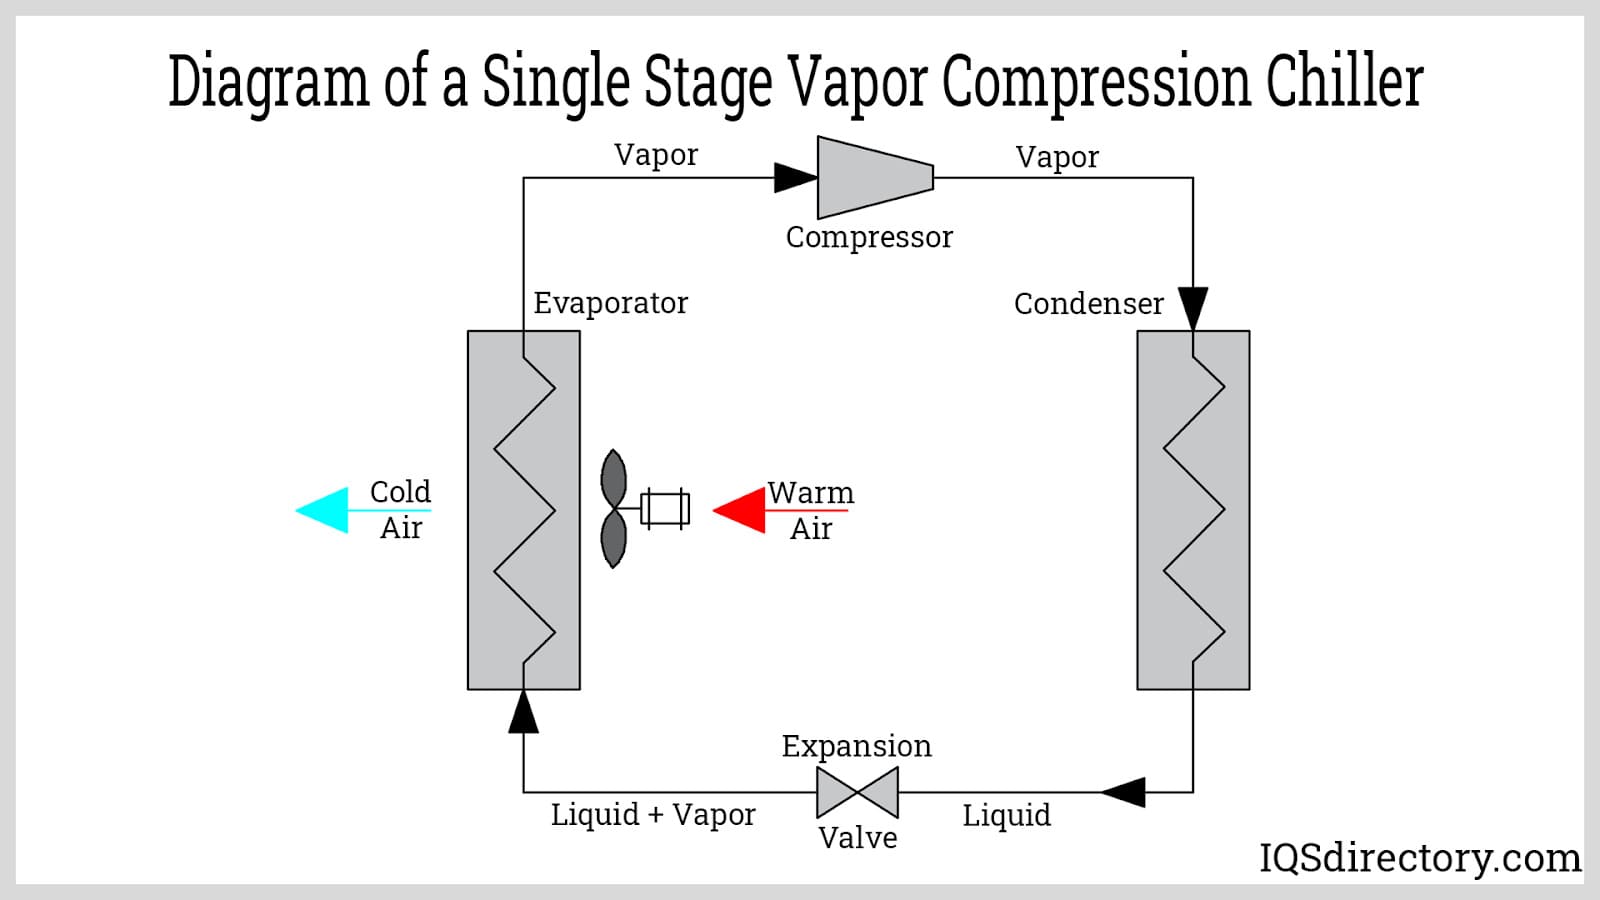 Diagram of a Single Stage Vapor Compression Chiller